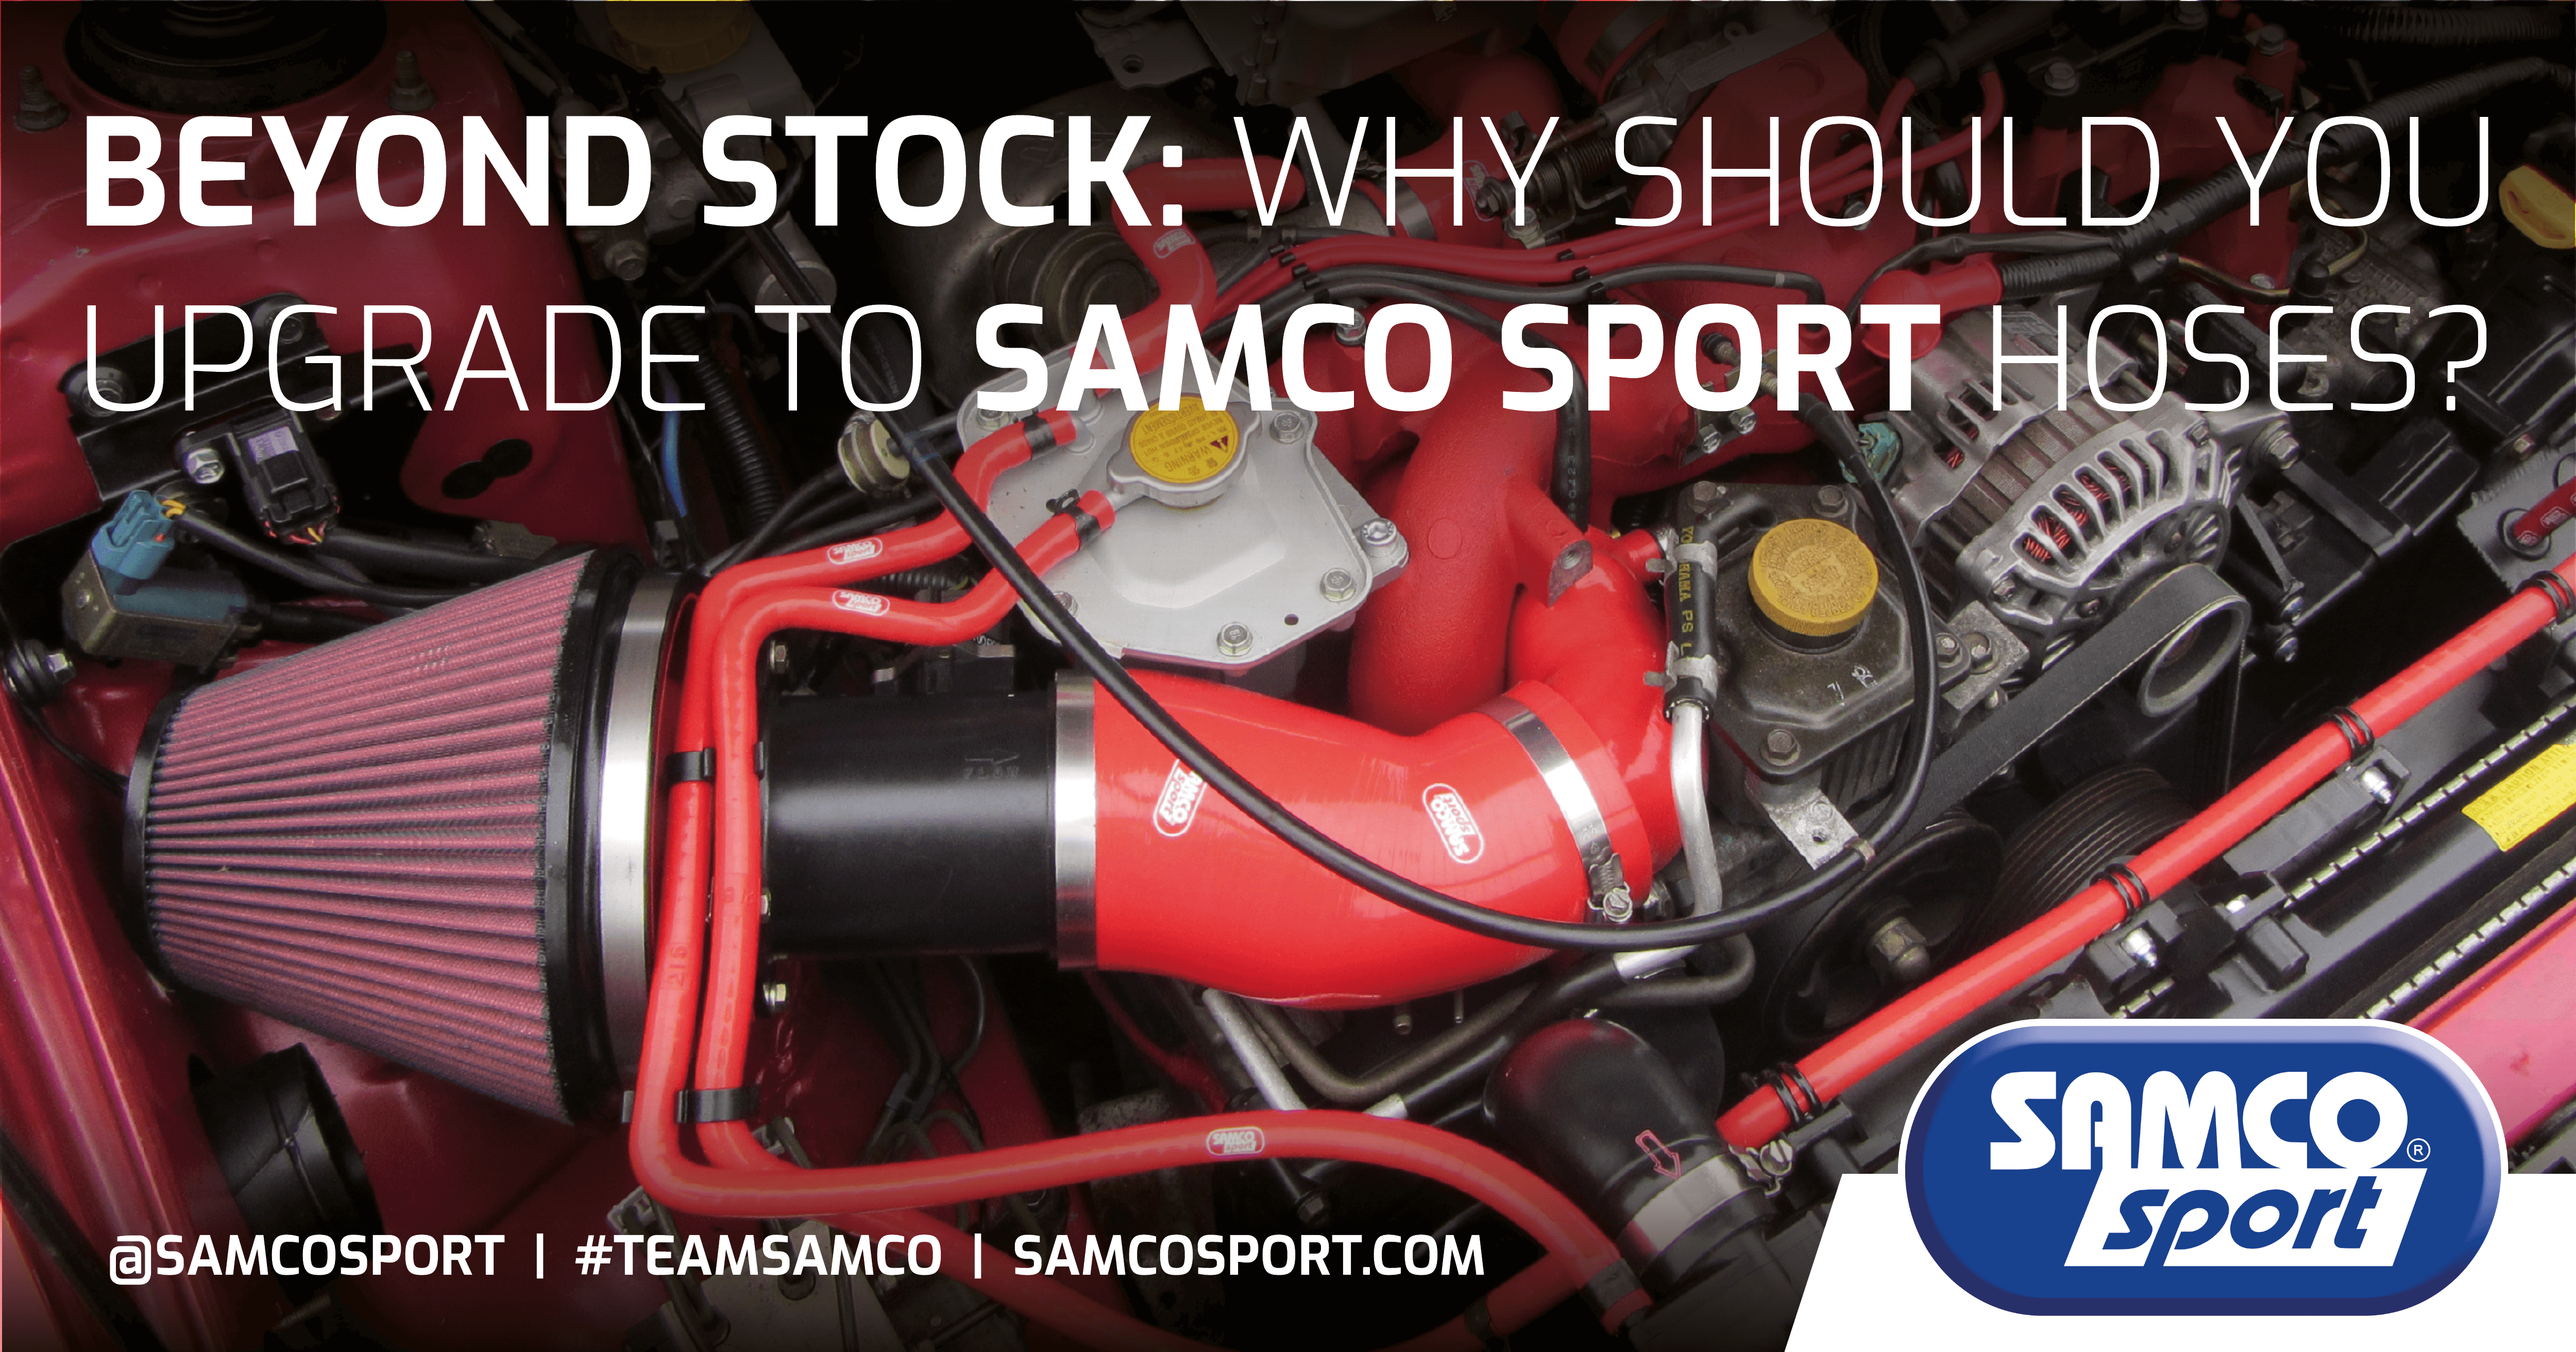 Why Upgrade to Samco Sport Hoses